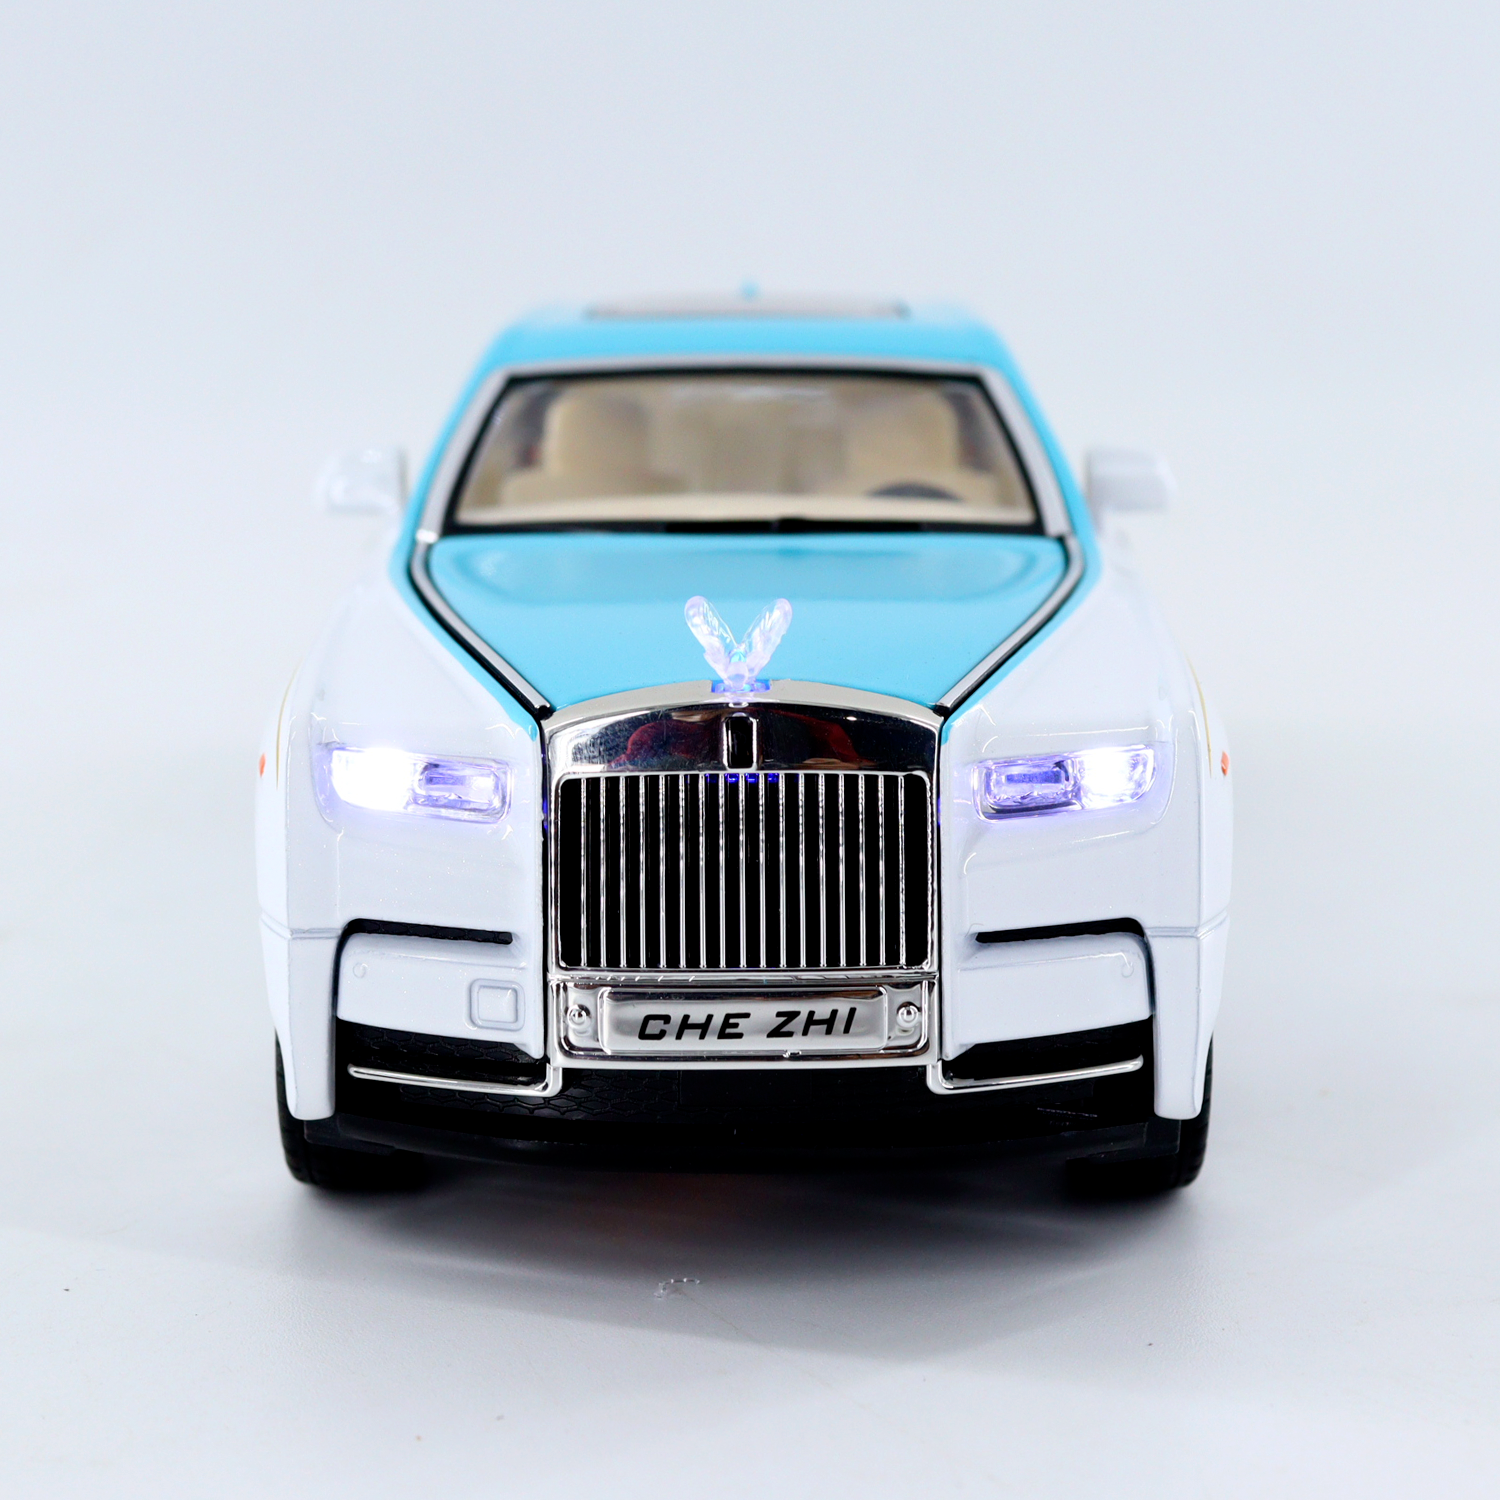 Rolls Royce Phantom Metal die cast Car Toy with Sound (White & Blue)